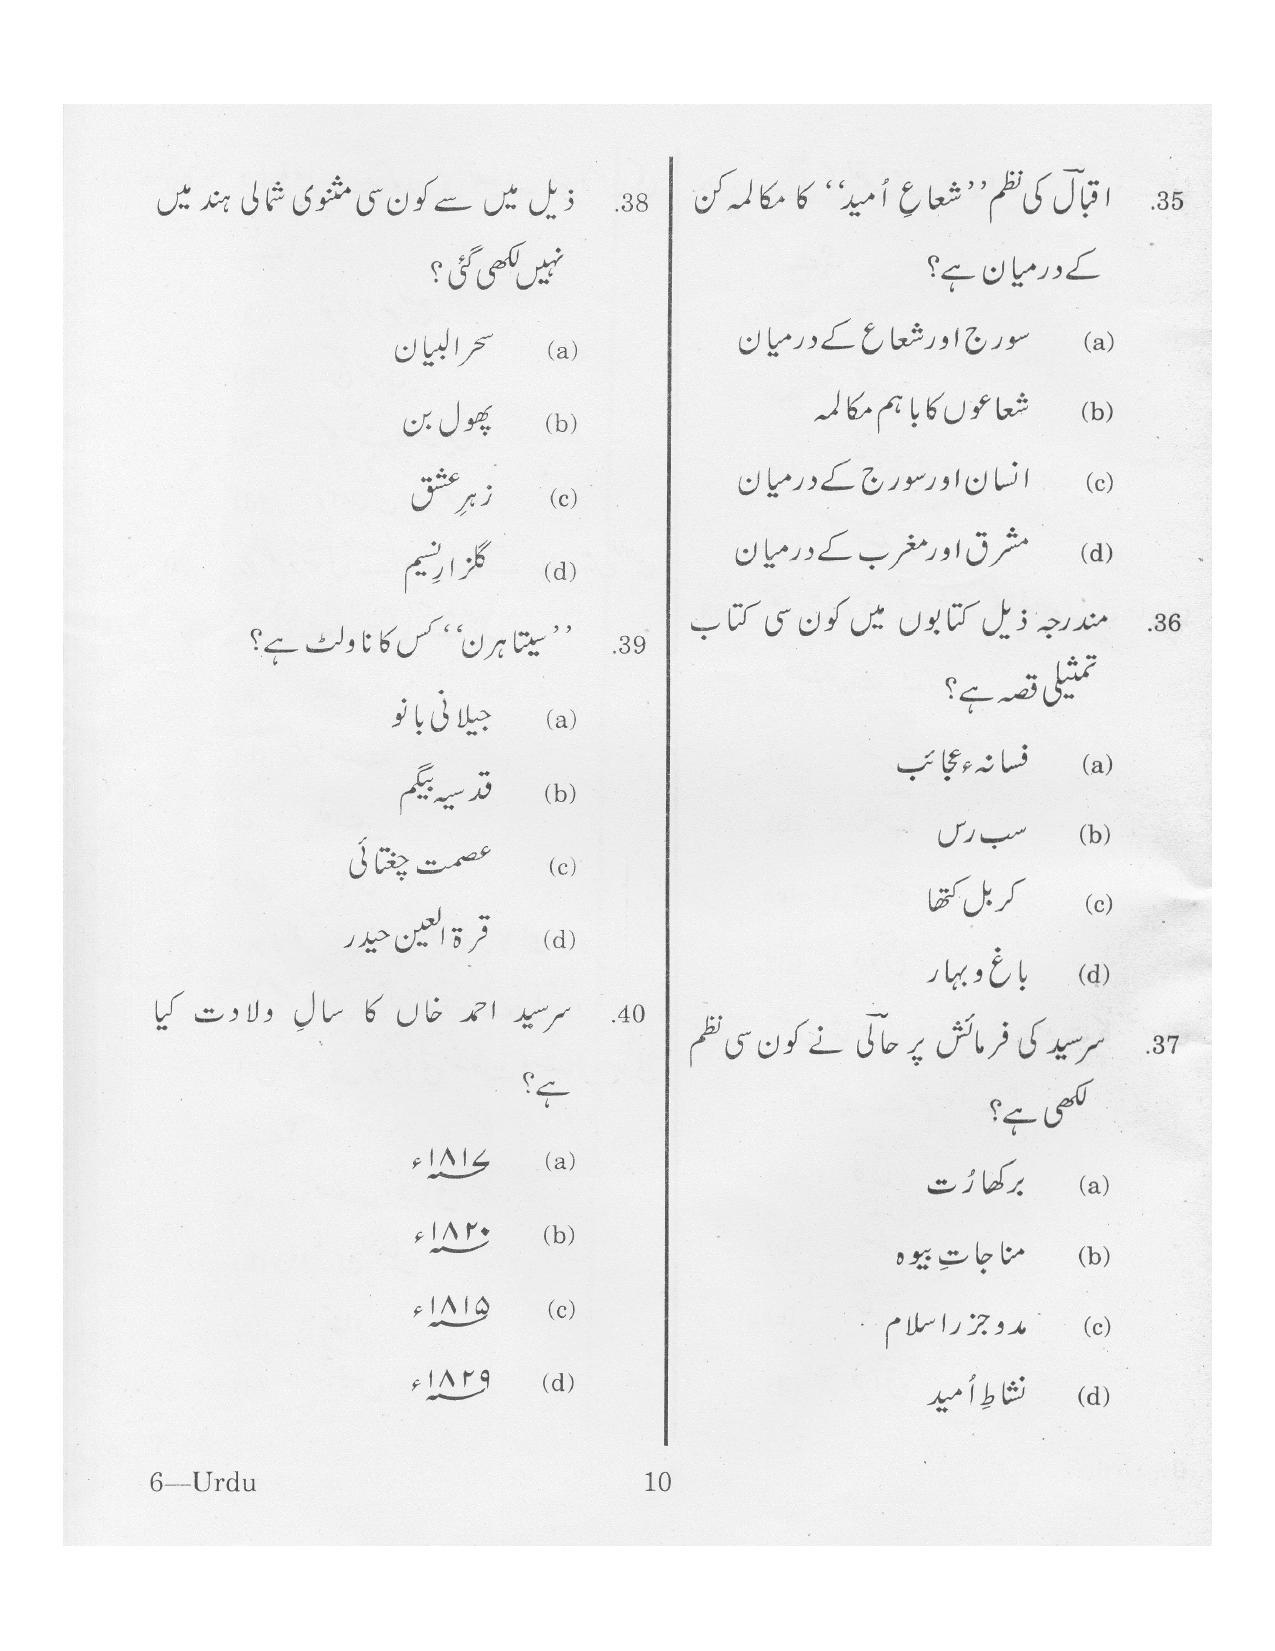 URATPG Urdu 2013 Question Paper - Page 9